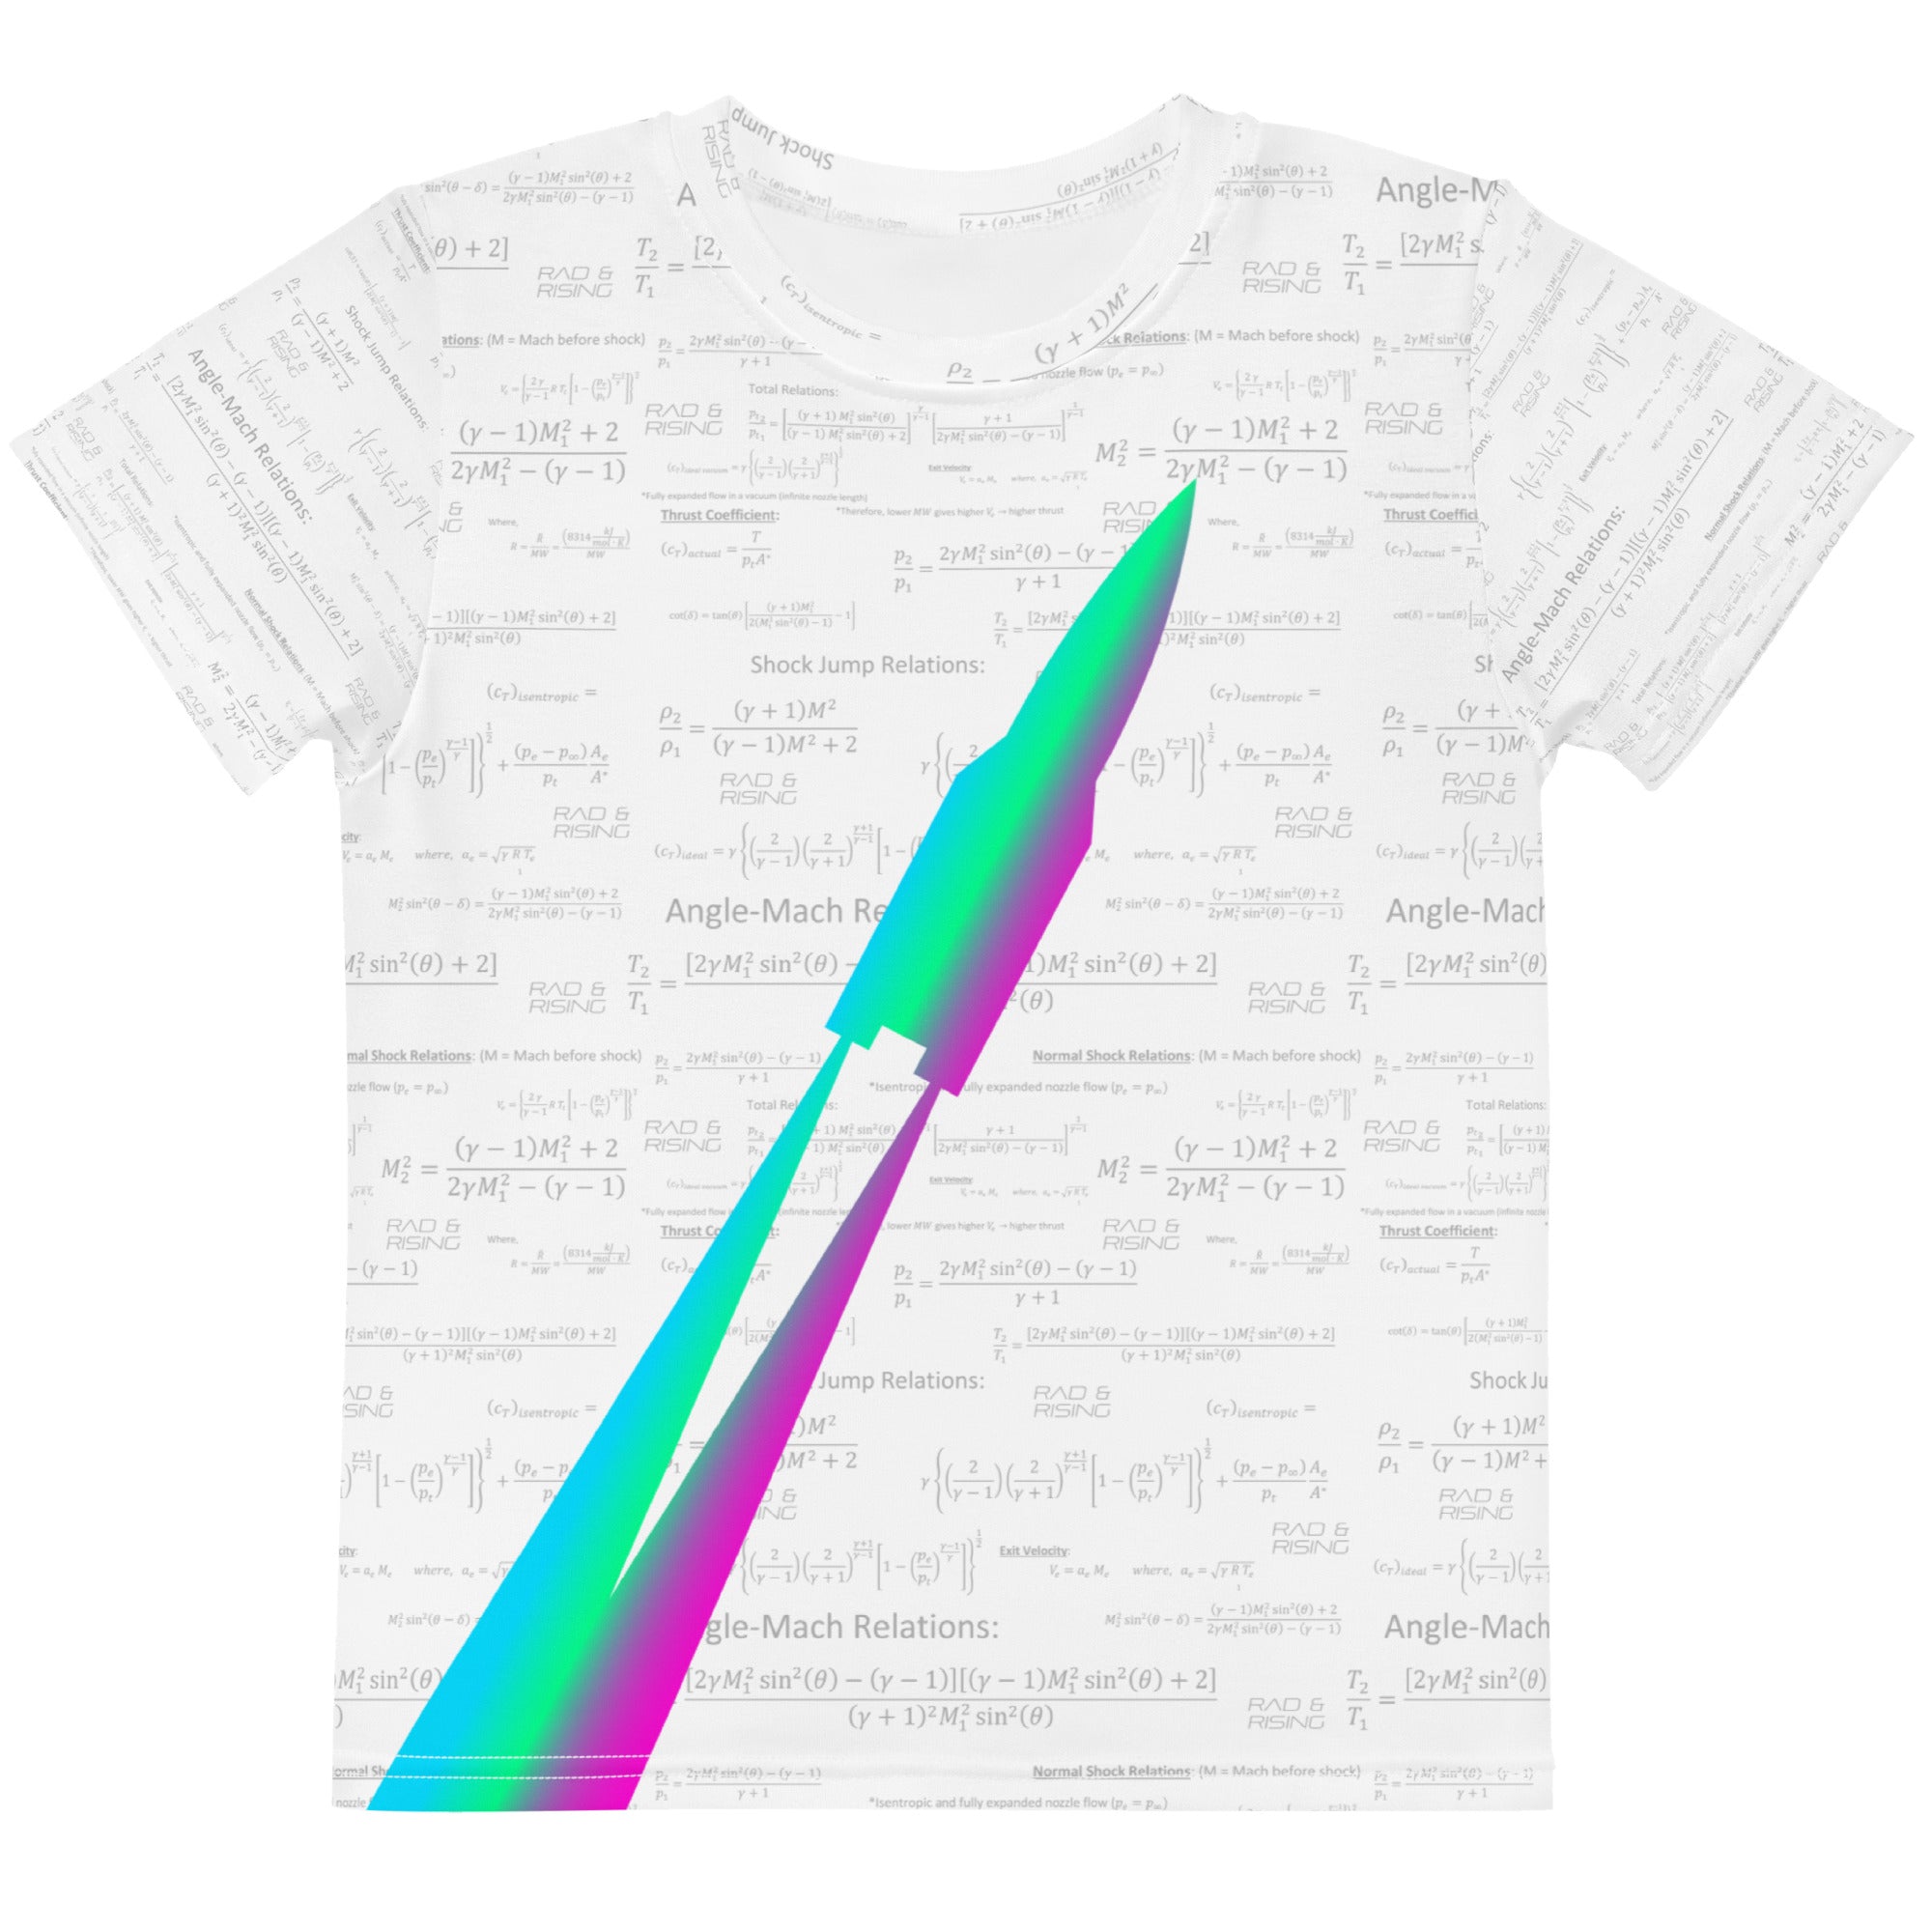 "Blastoff" with Rocket Math all over print Kids Crew Neck T-Shirt